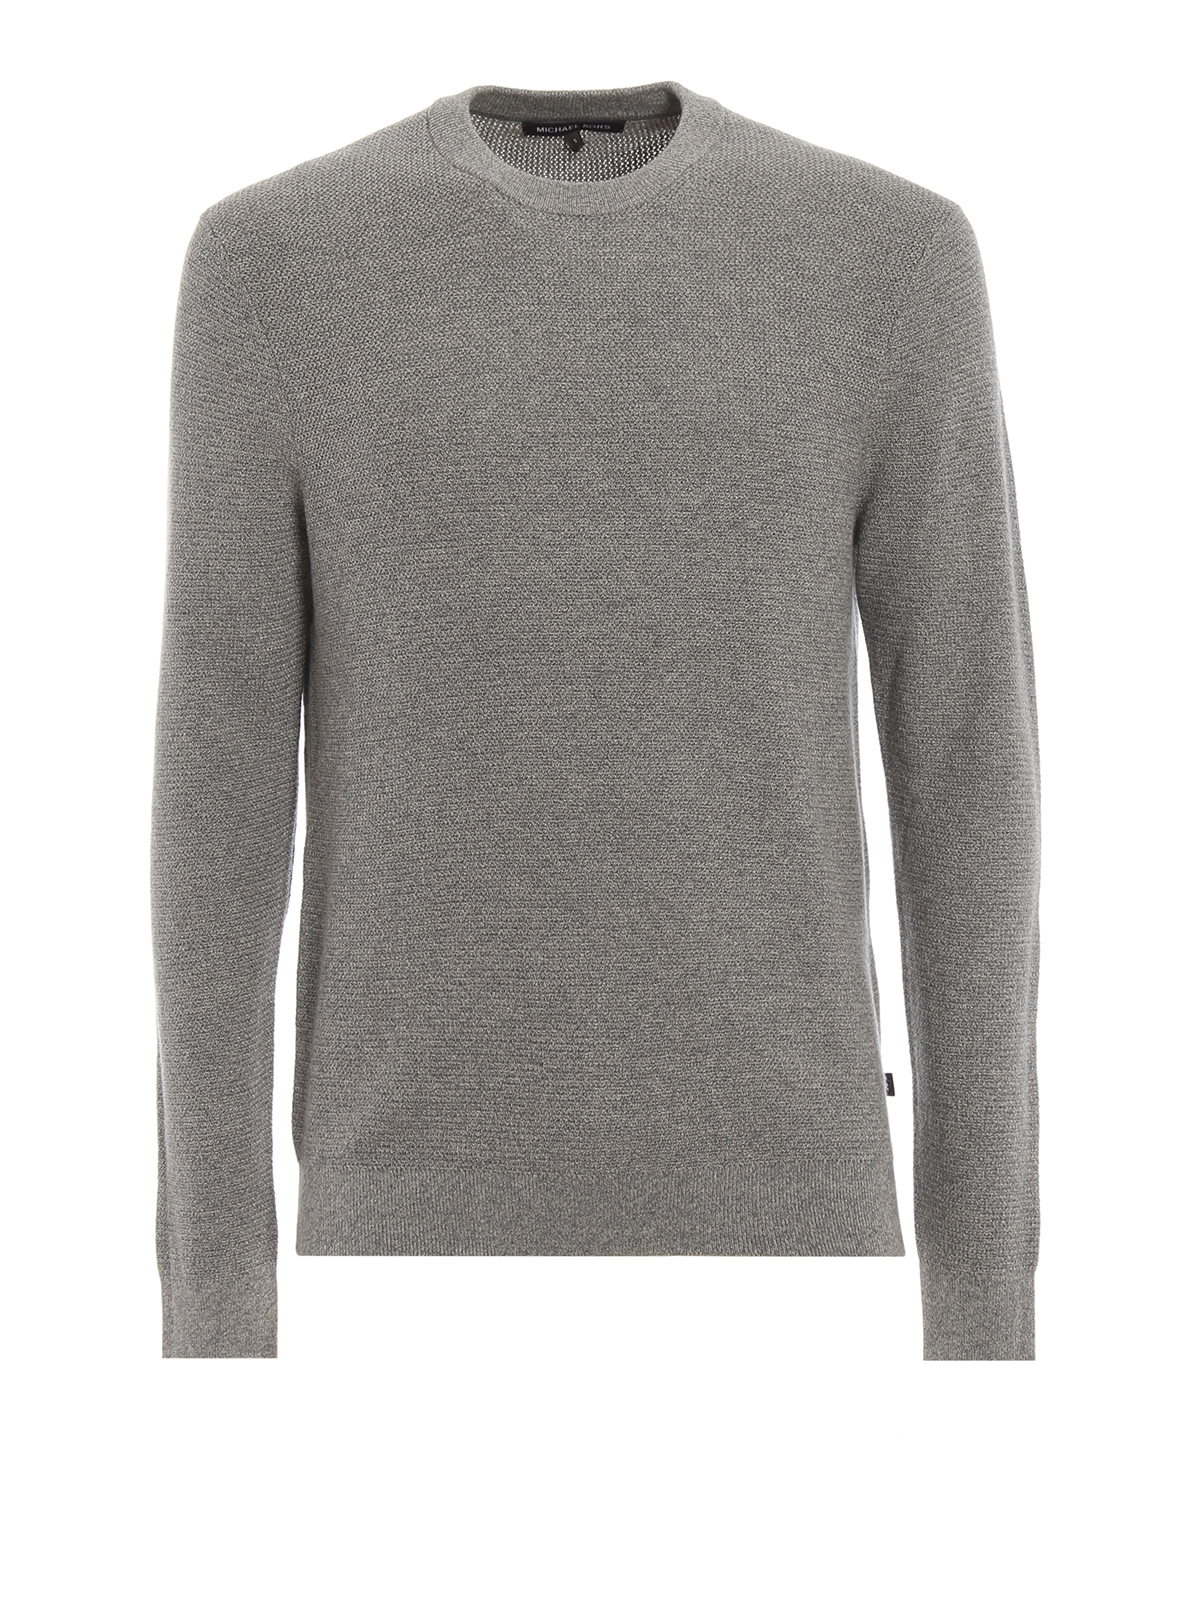 Michael Kors Light Grey Soft Cotton And Wool Sweater